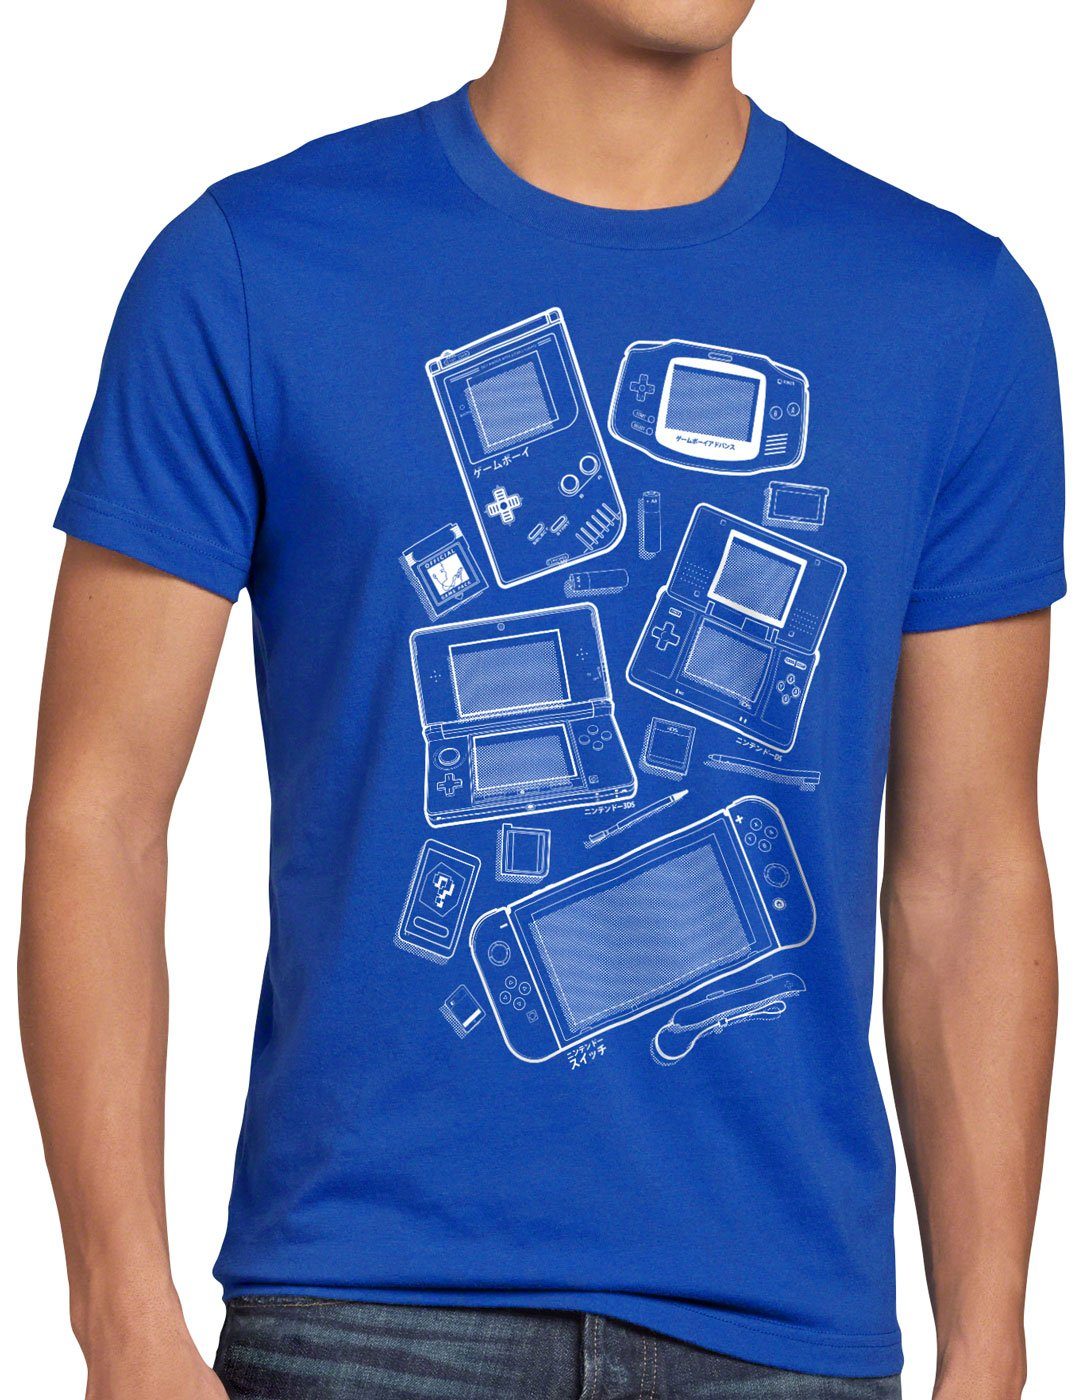 style3 Print-Shirt Herren T-Shirt Game Maniac switch lite ds wii 3ds gamer blau